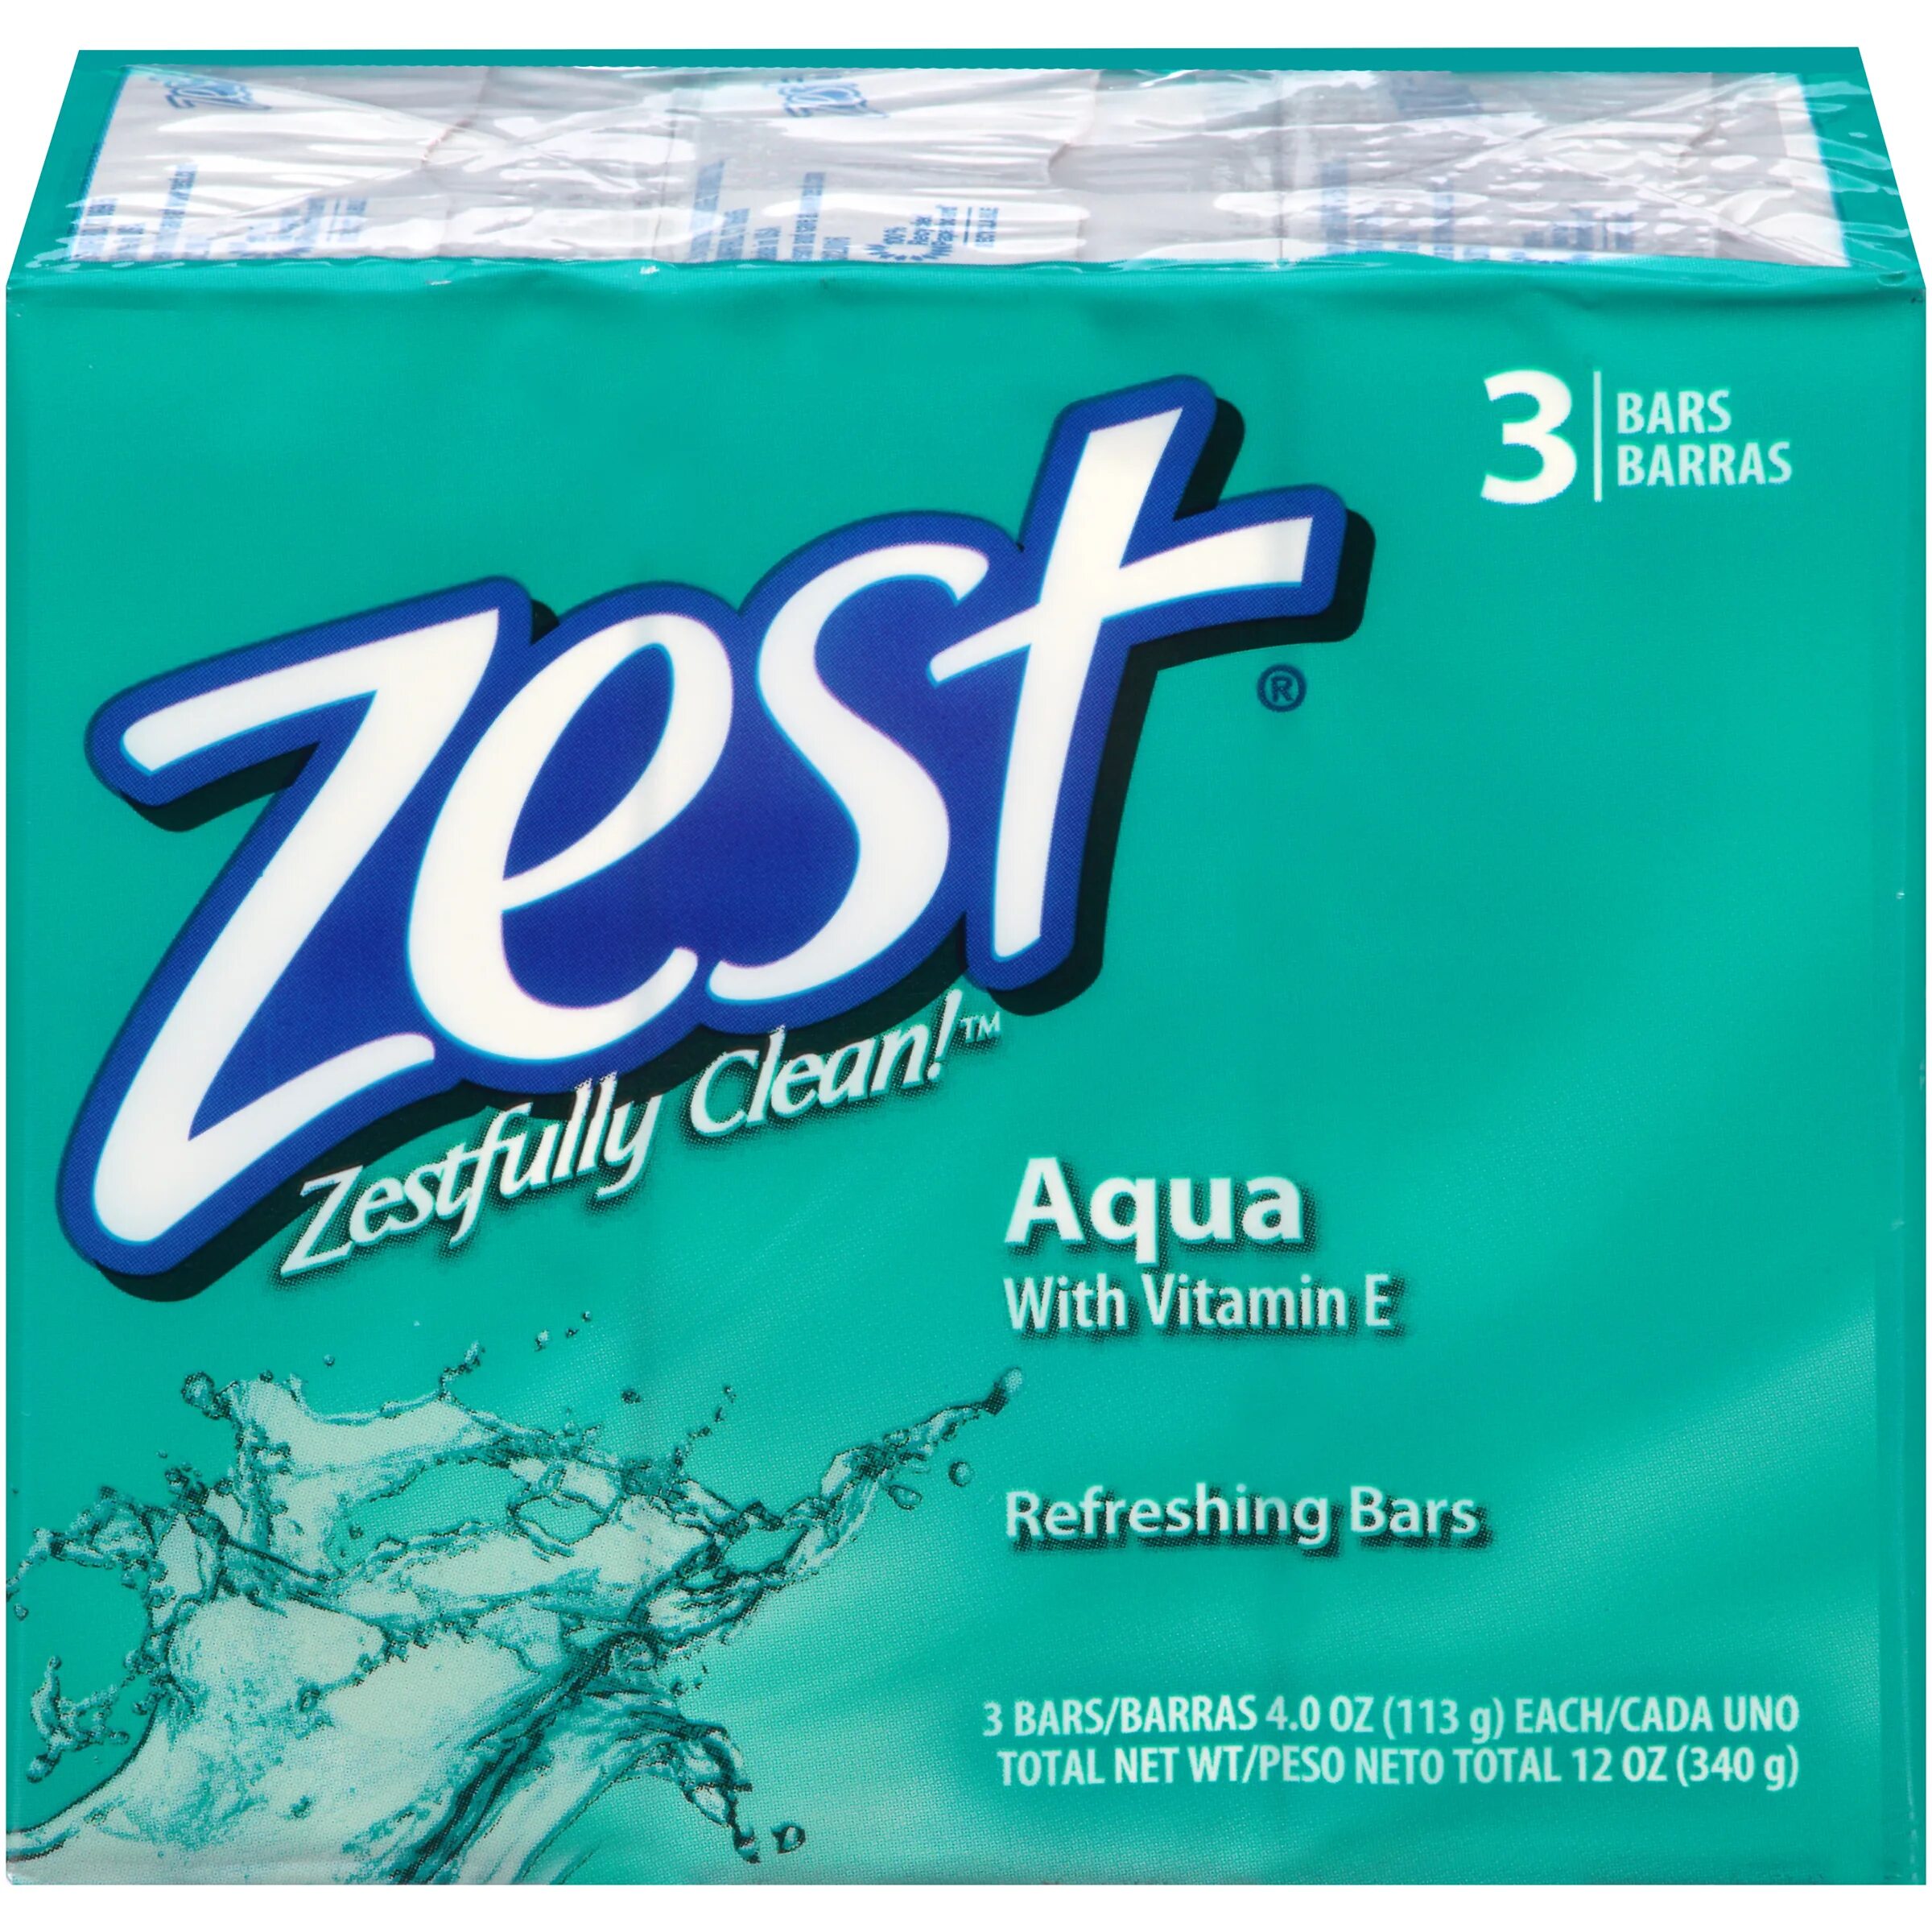 Aqua перевод на русский. Зифа Zest. “Zestfully clean!”. Zest порошок. A Bar of Soap.